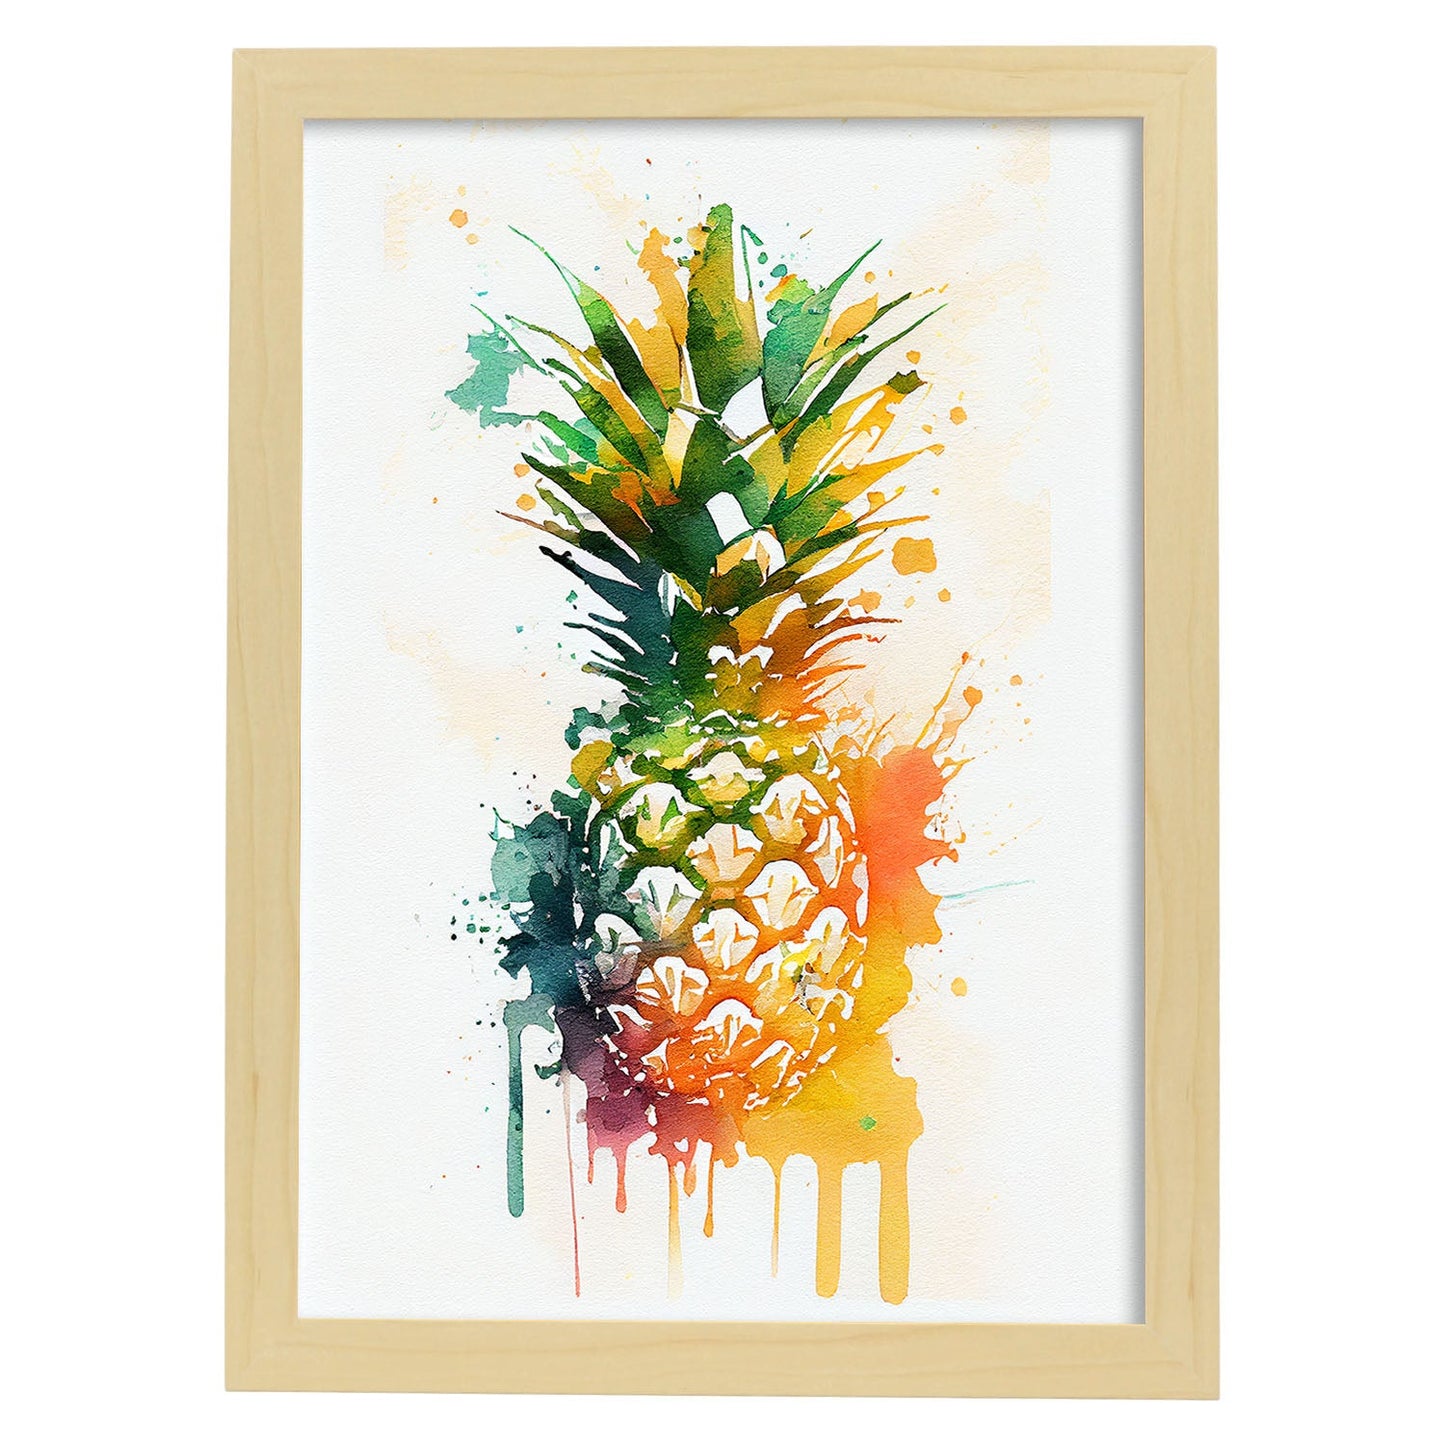 Nacnic minimalist Pineapple_3. Aesthetic Wall Art Prints for Bedroom or Living Room Design.-Artwork-Nacnic-A4-Marco Madera Clara-Nacnic Estudio SL